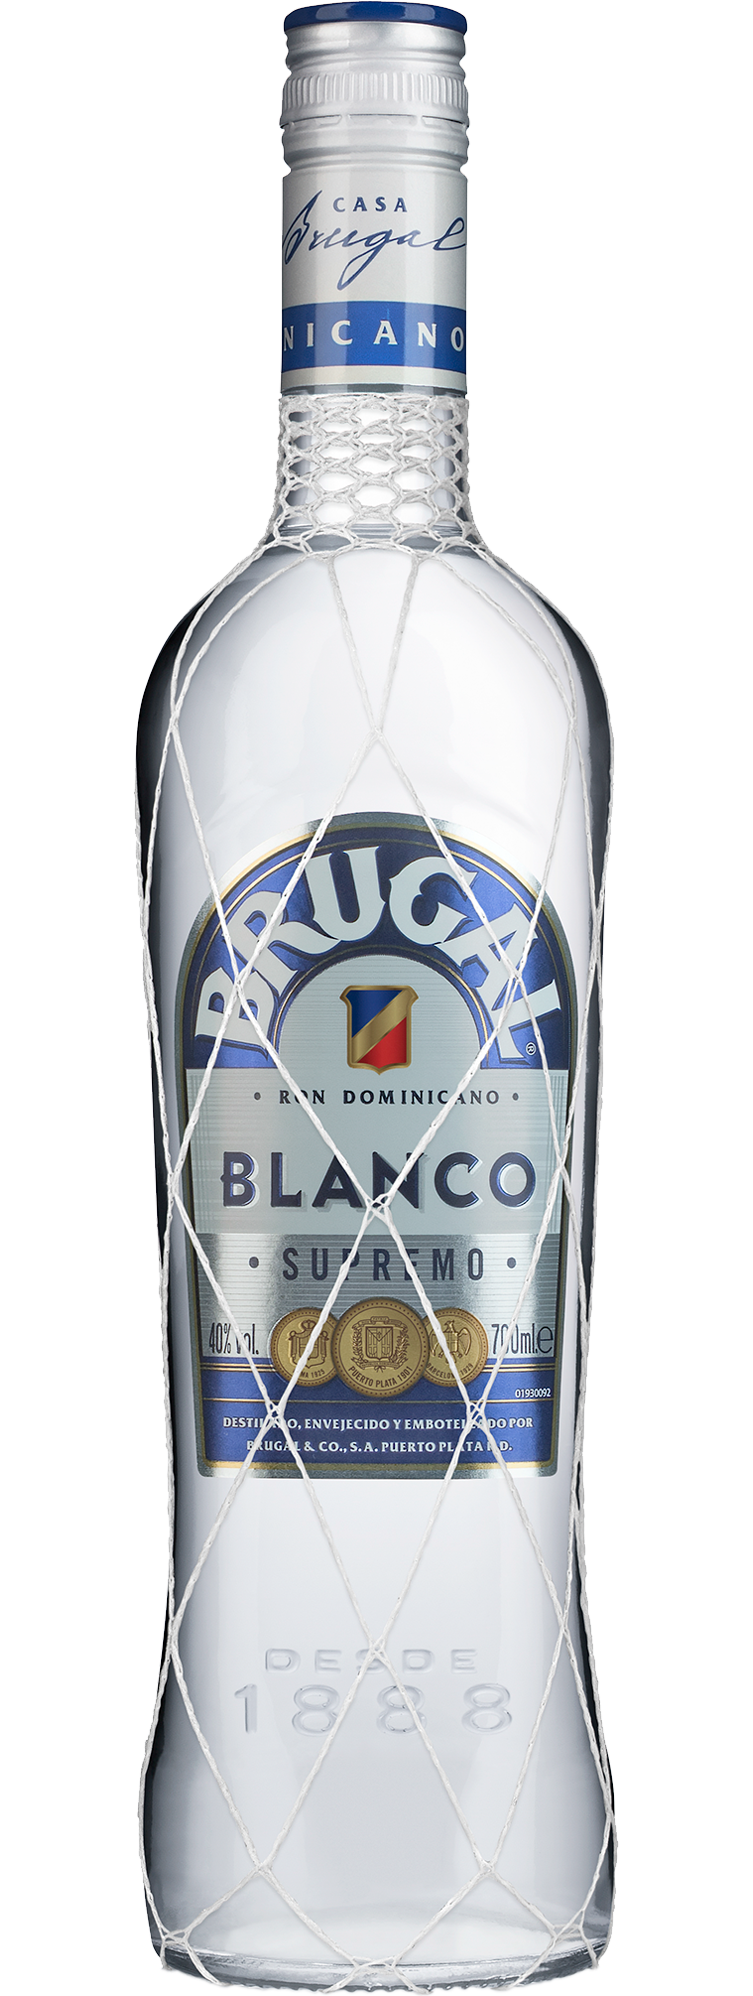 Rum Brugal Blanco Supremo 70cl 40% Dominican Republic